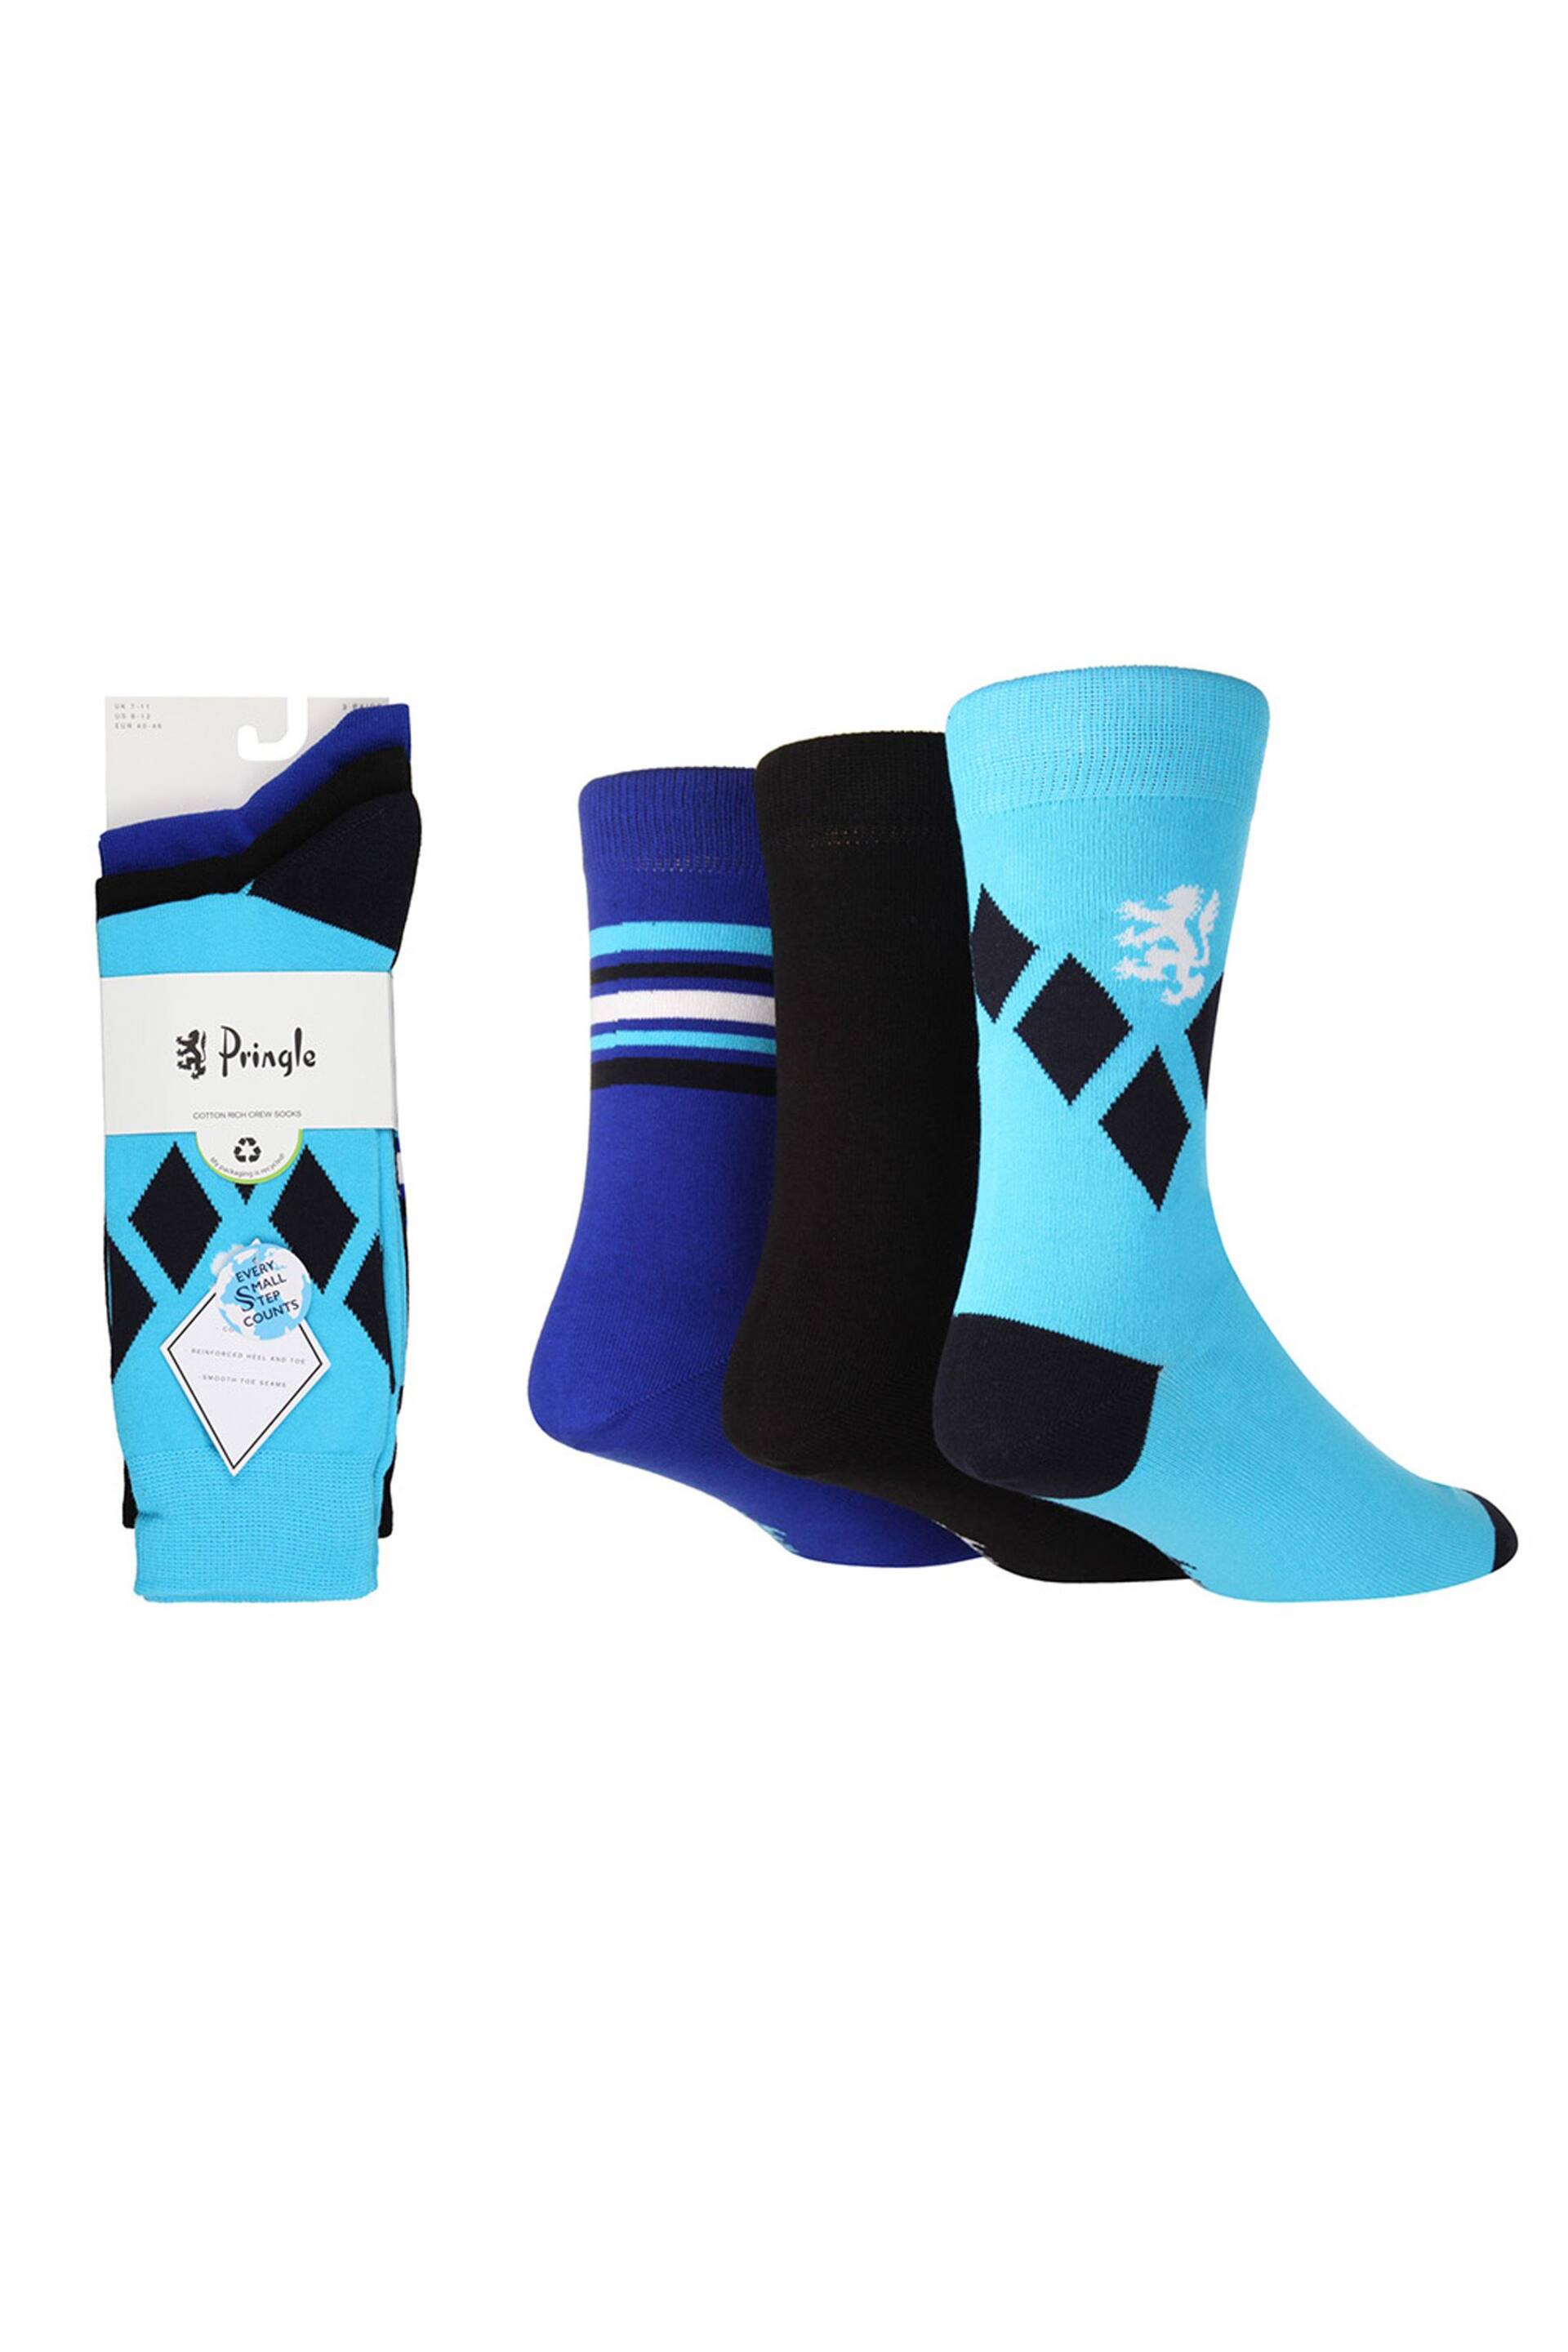 Pringle Blue Fashion Crew Socks - Image 1 of 4